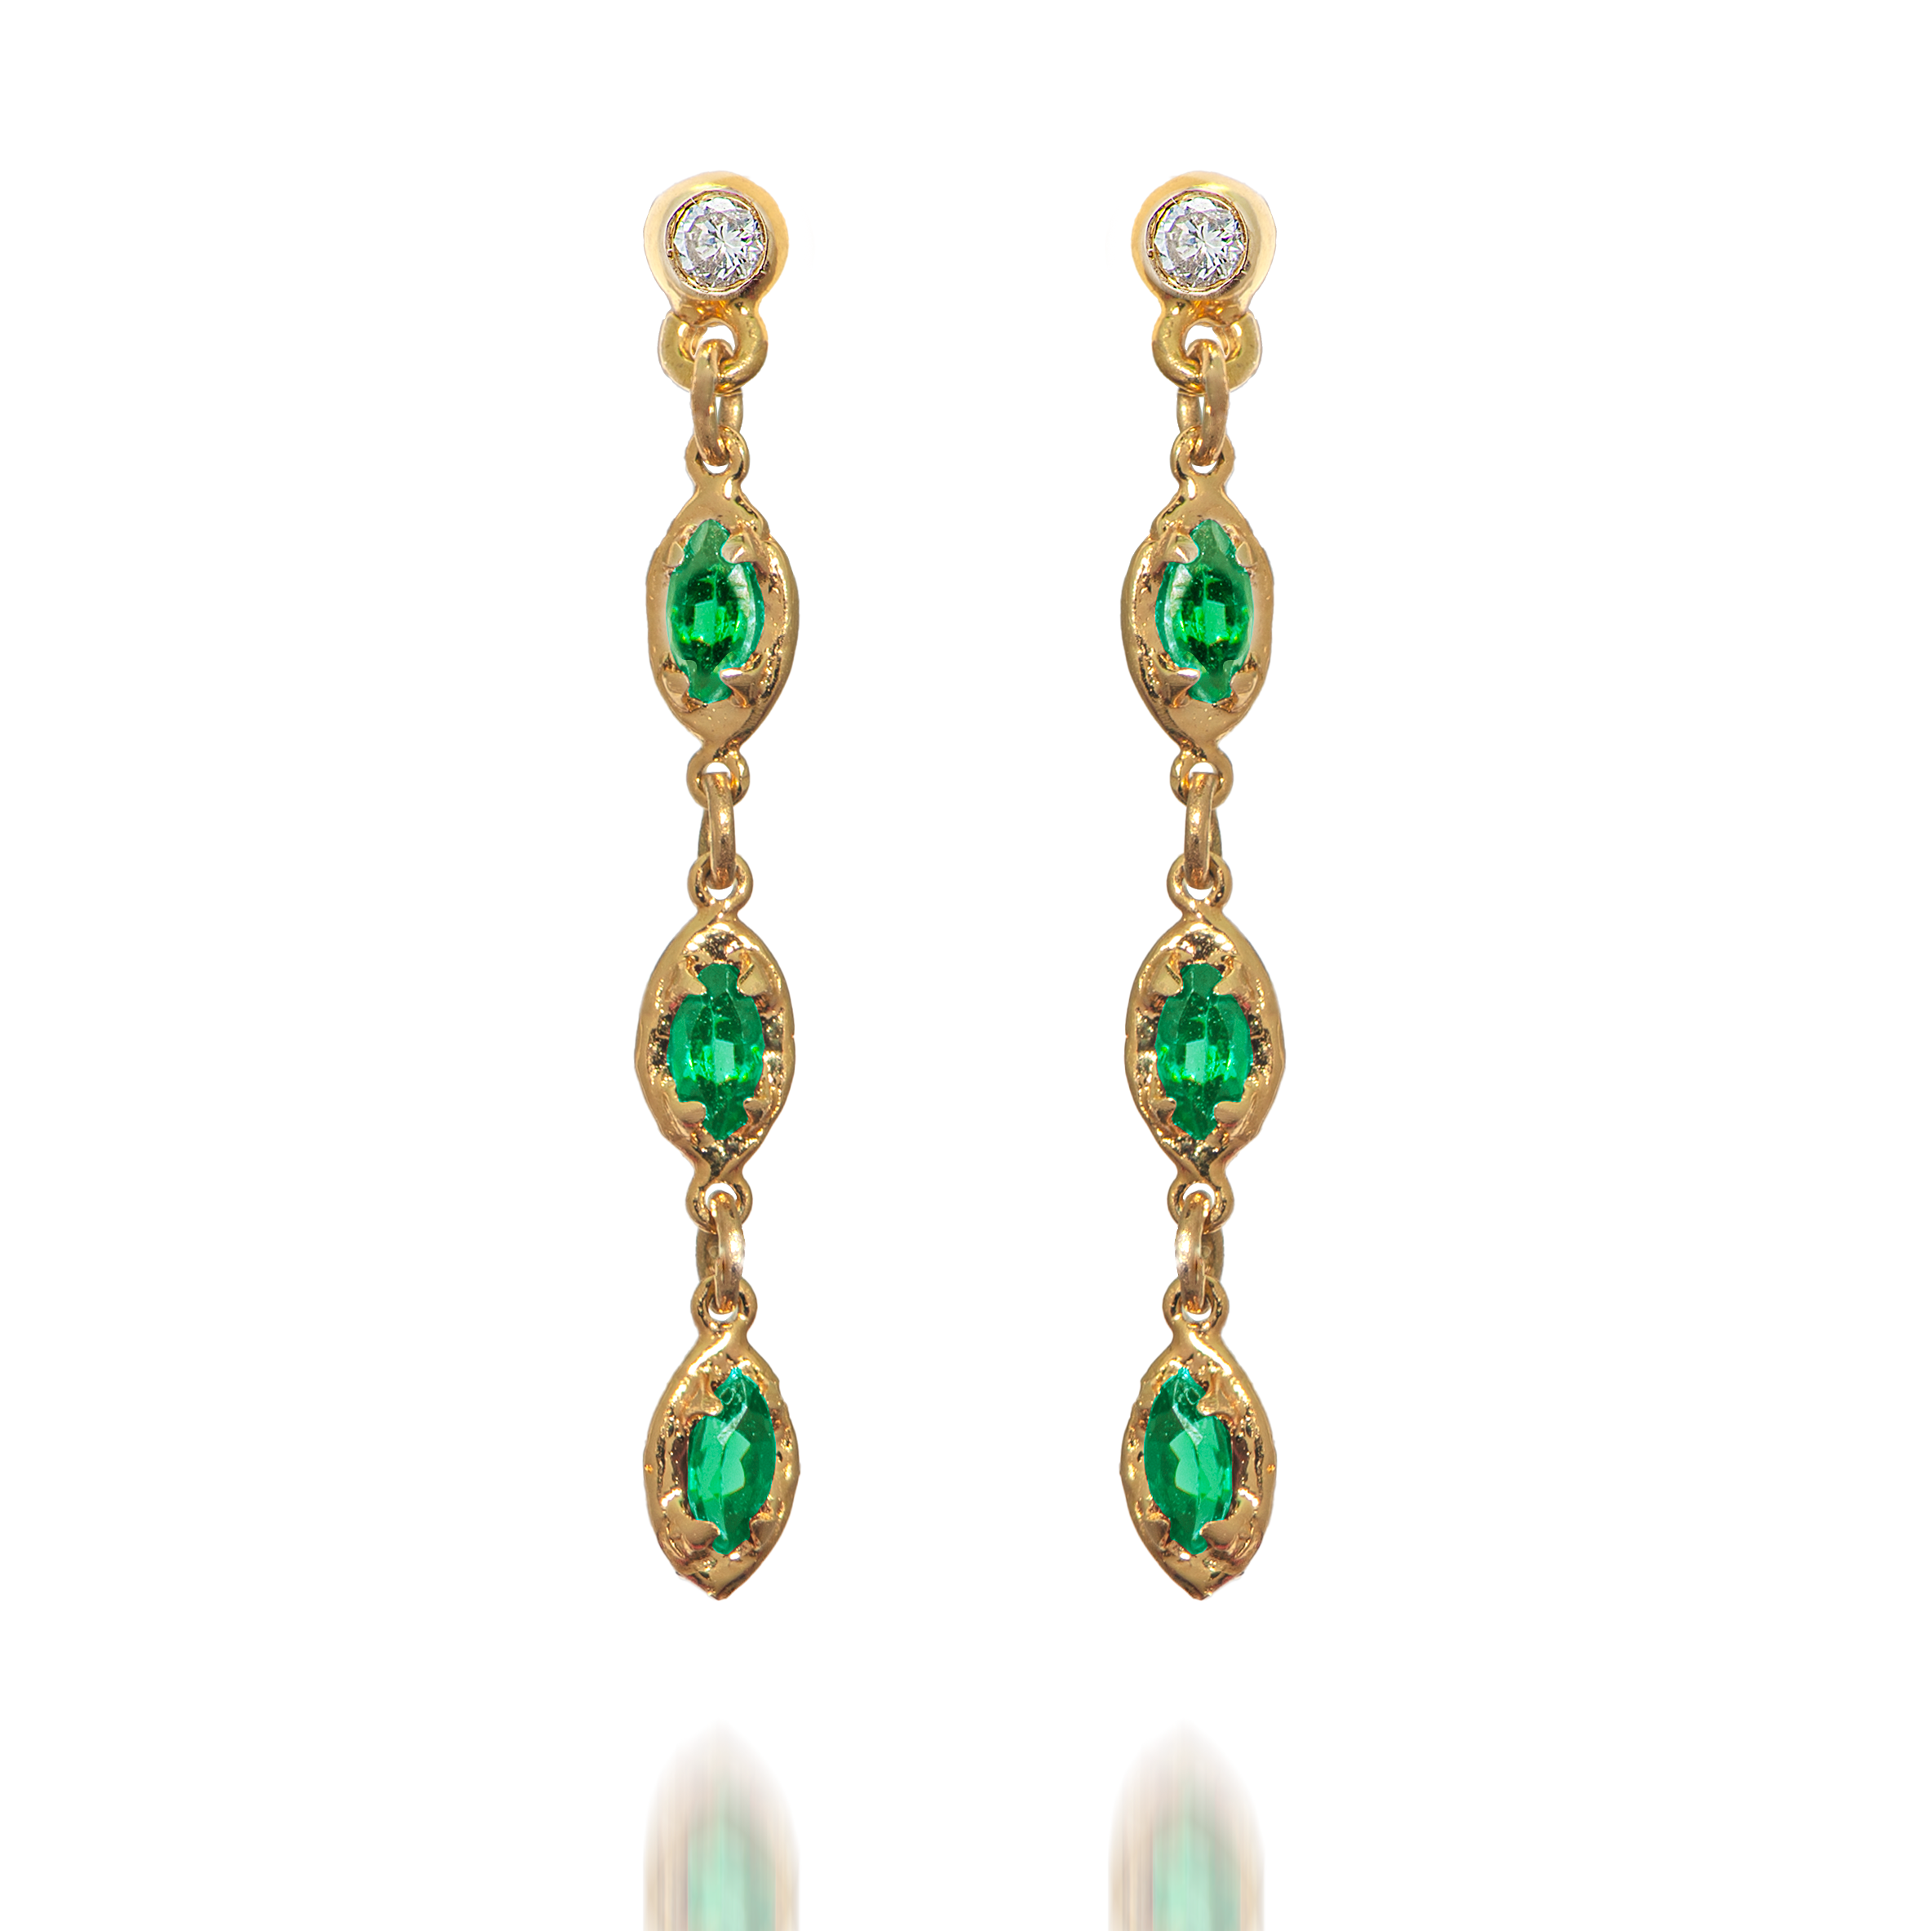 Anat earrings - emerald & diamonds - Danielle Gerber Freedom Jewelry